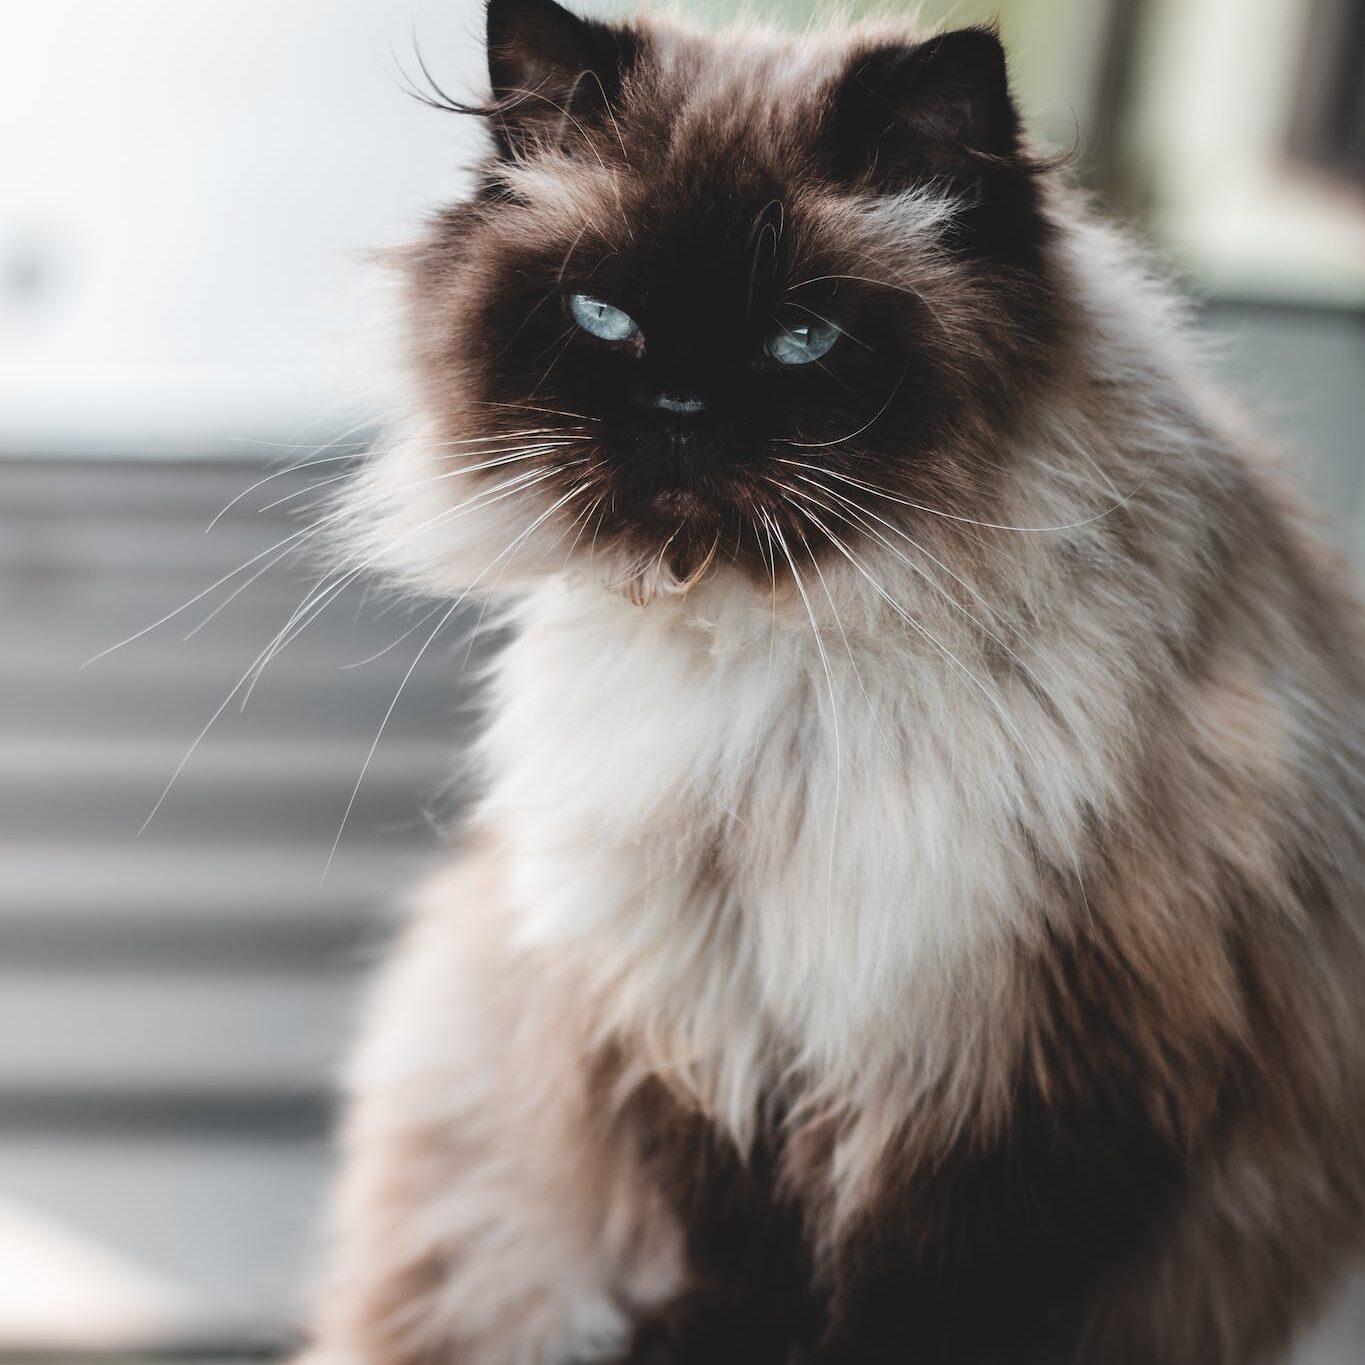 Close-Up Photo of Downy Cat